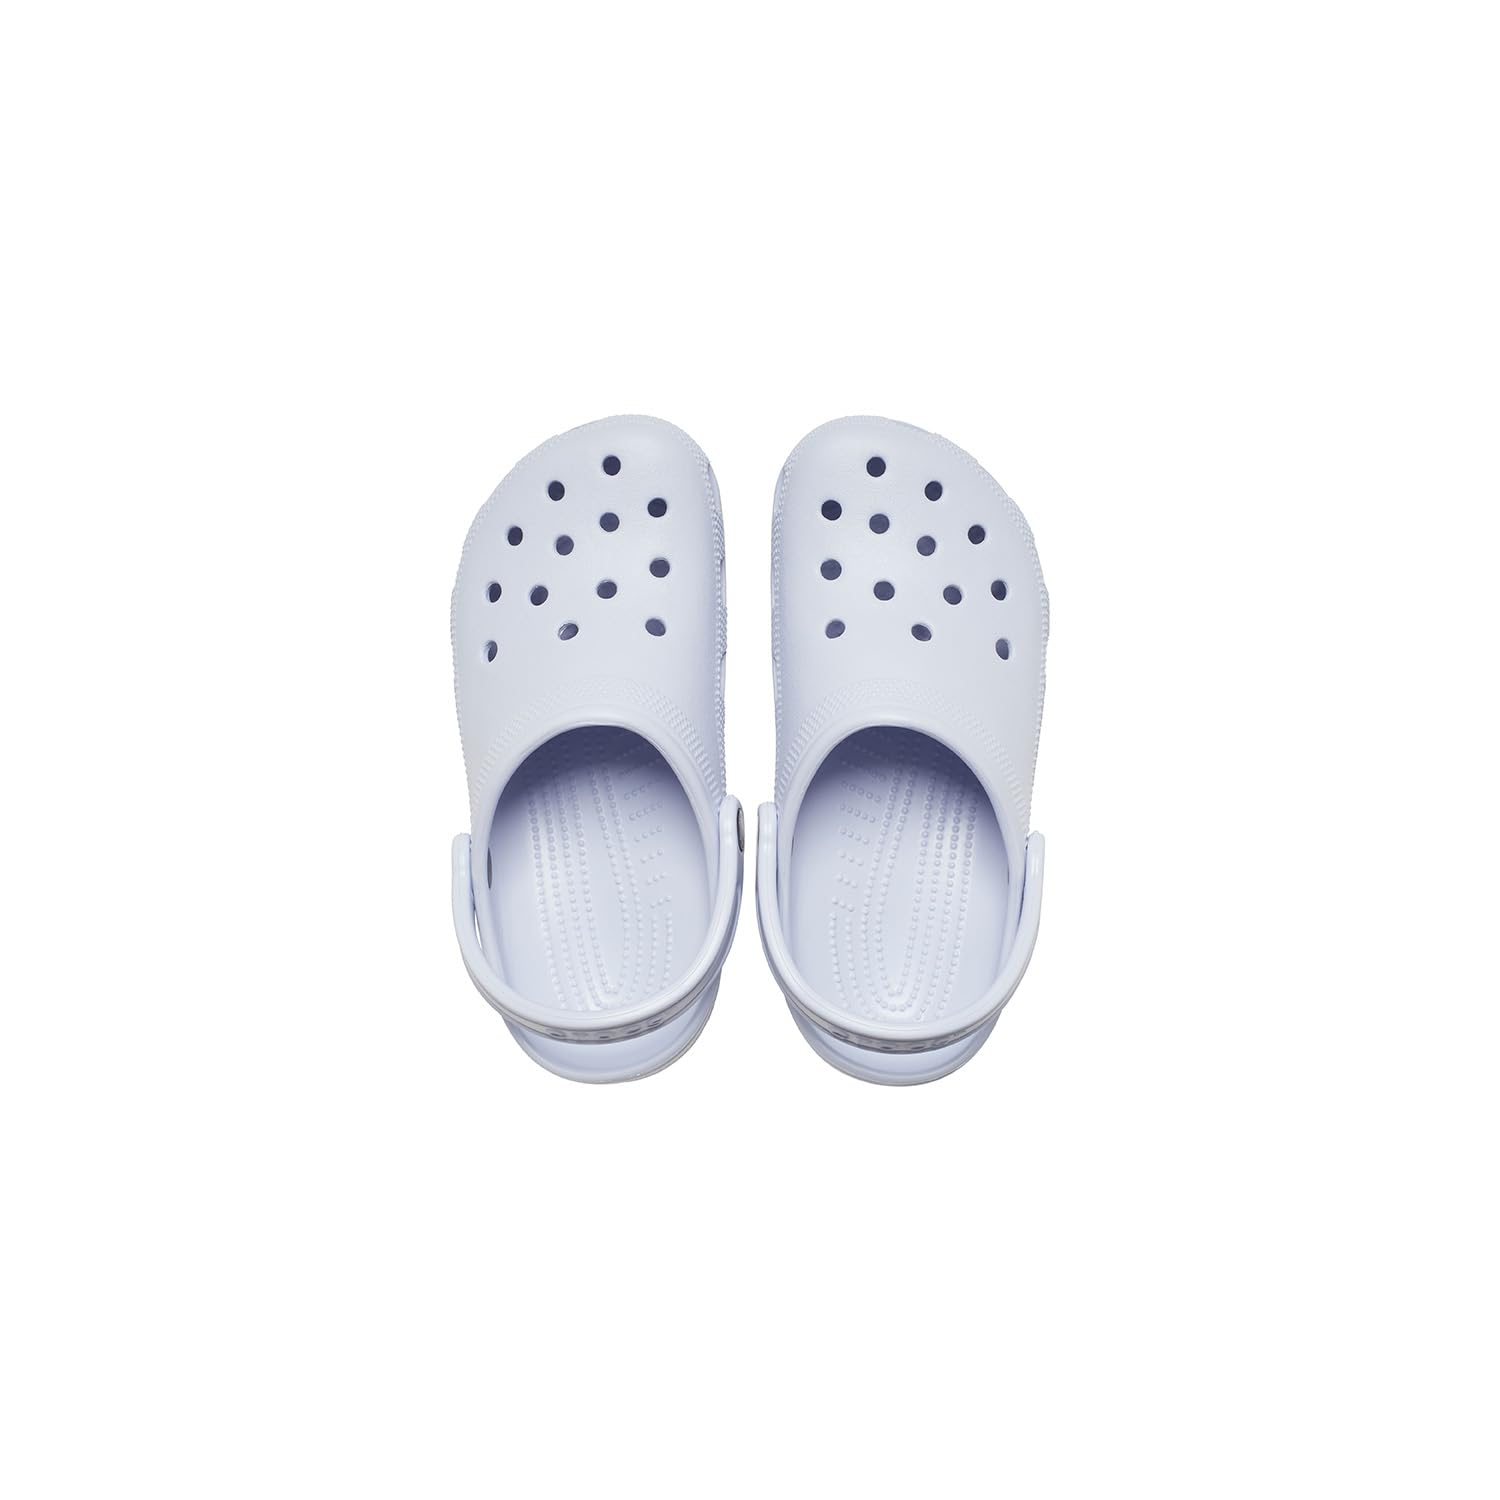 Crocs Unisex-Adult Classic Clog, Clogs for Women and Men